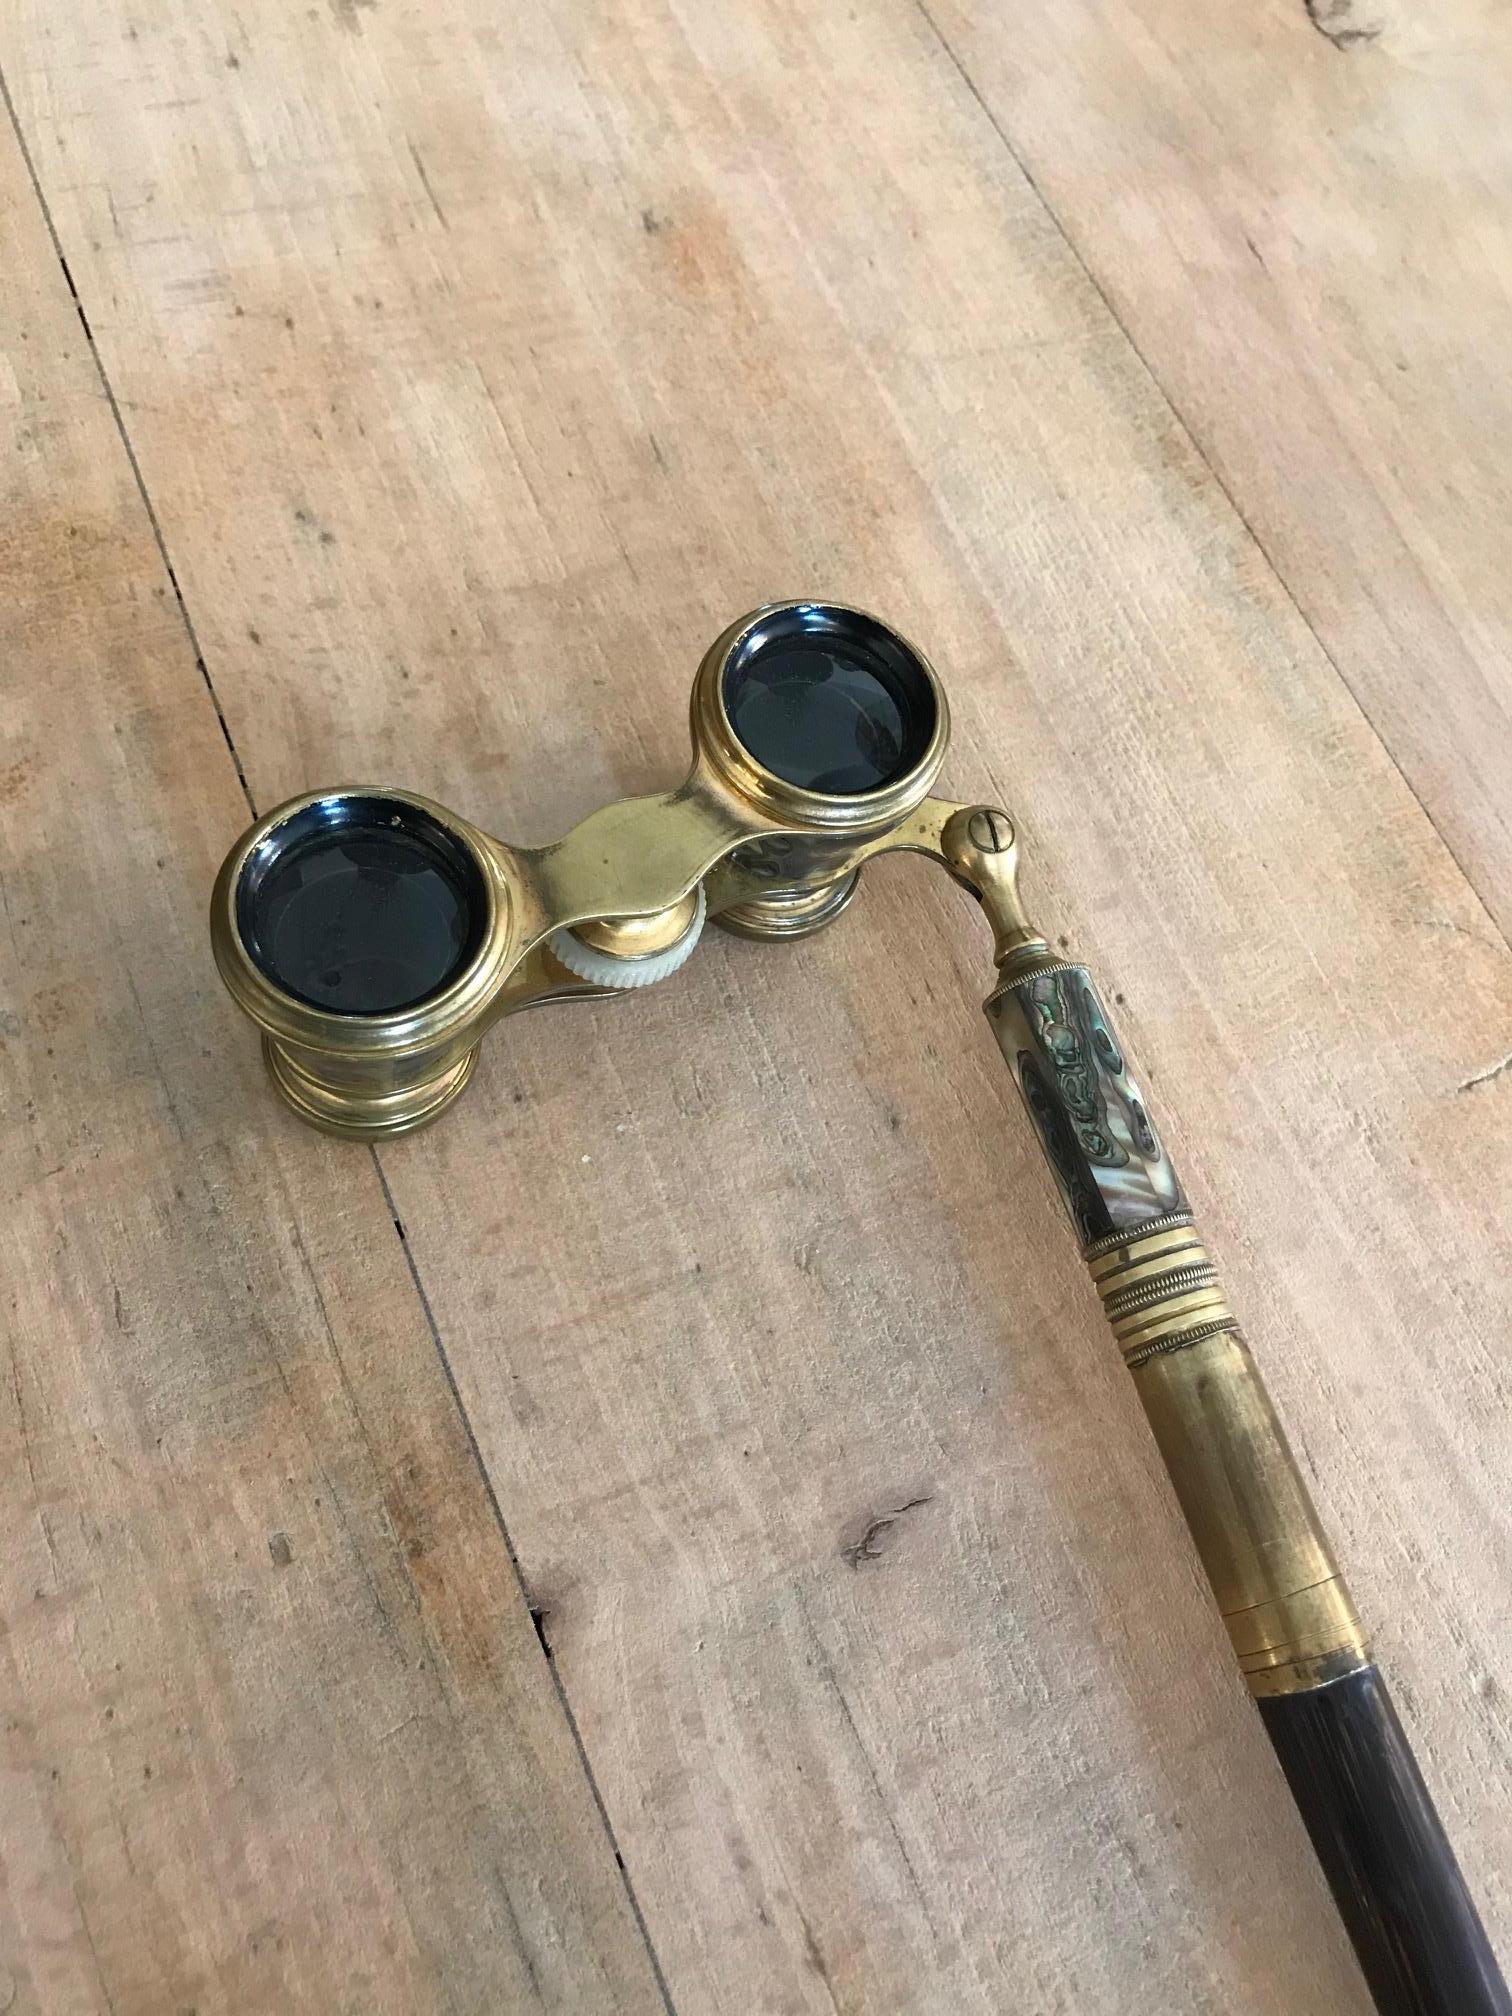 opera glasses on a stick